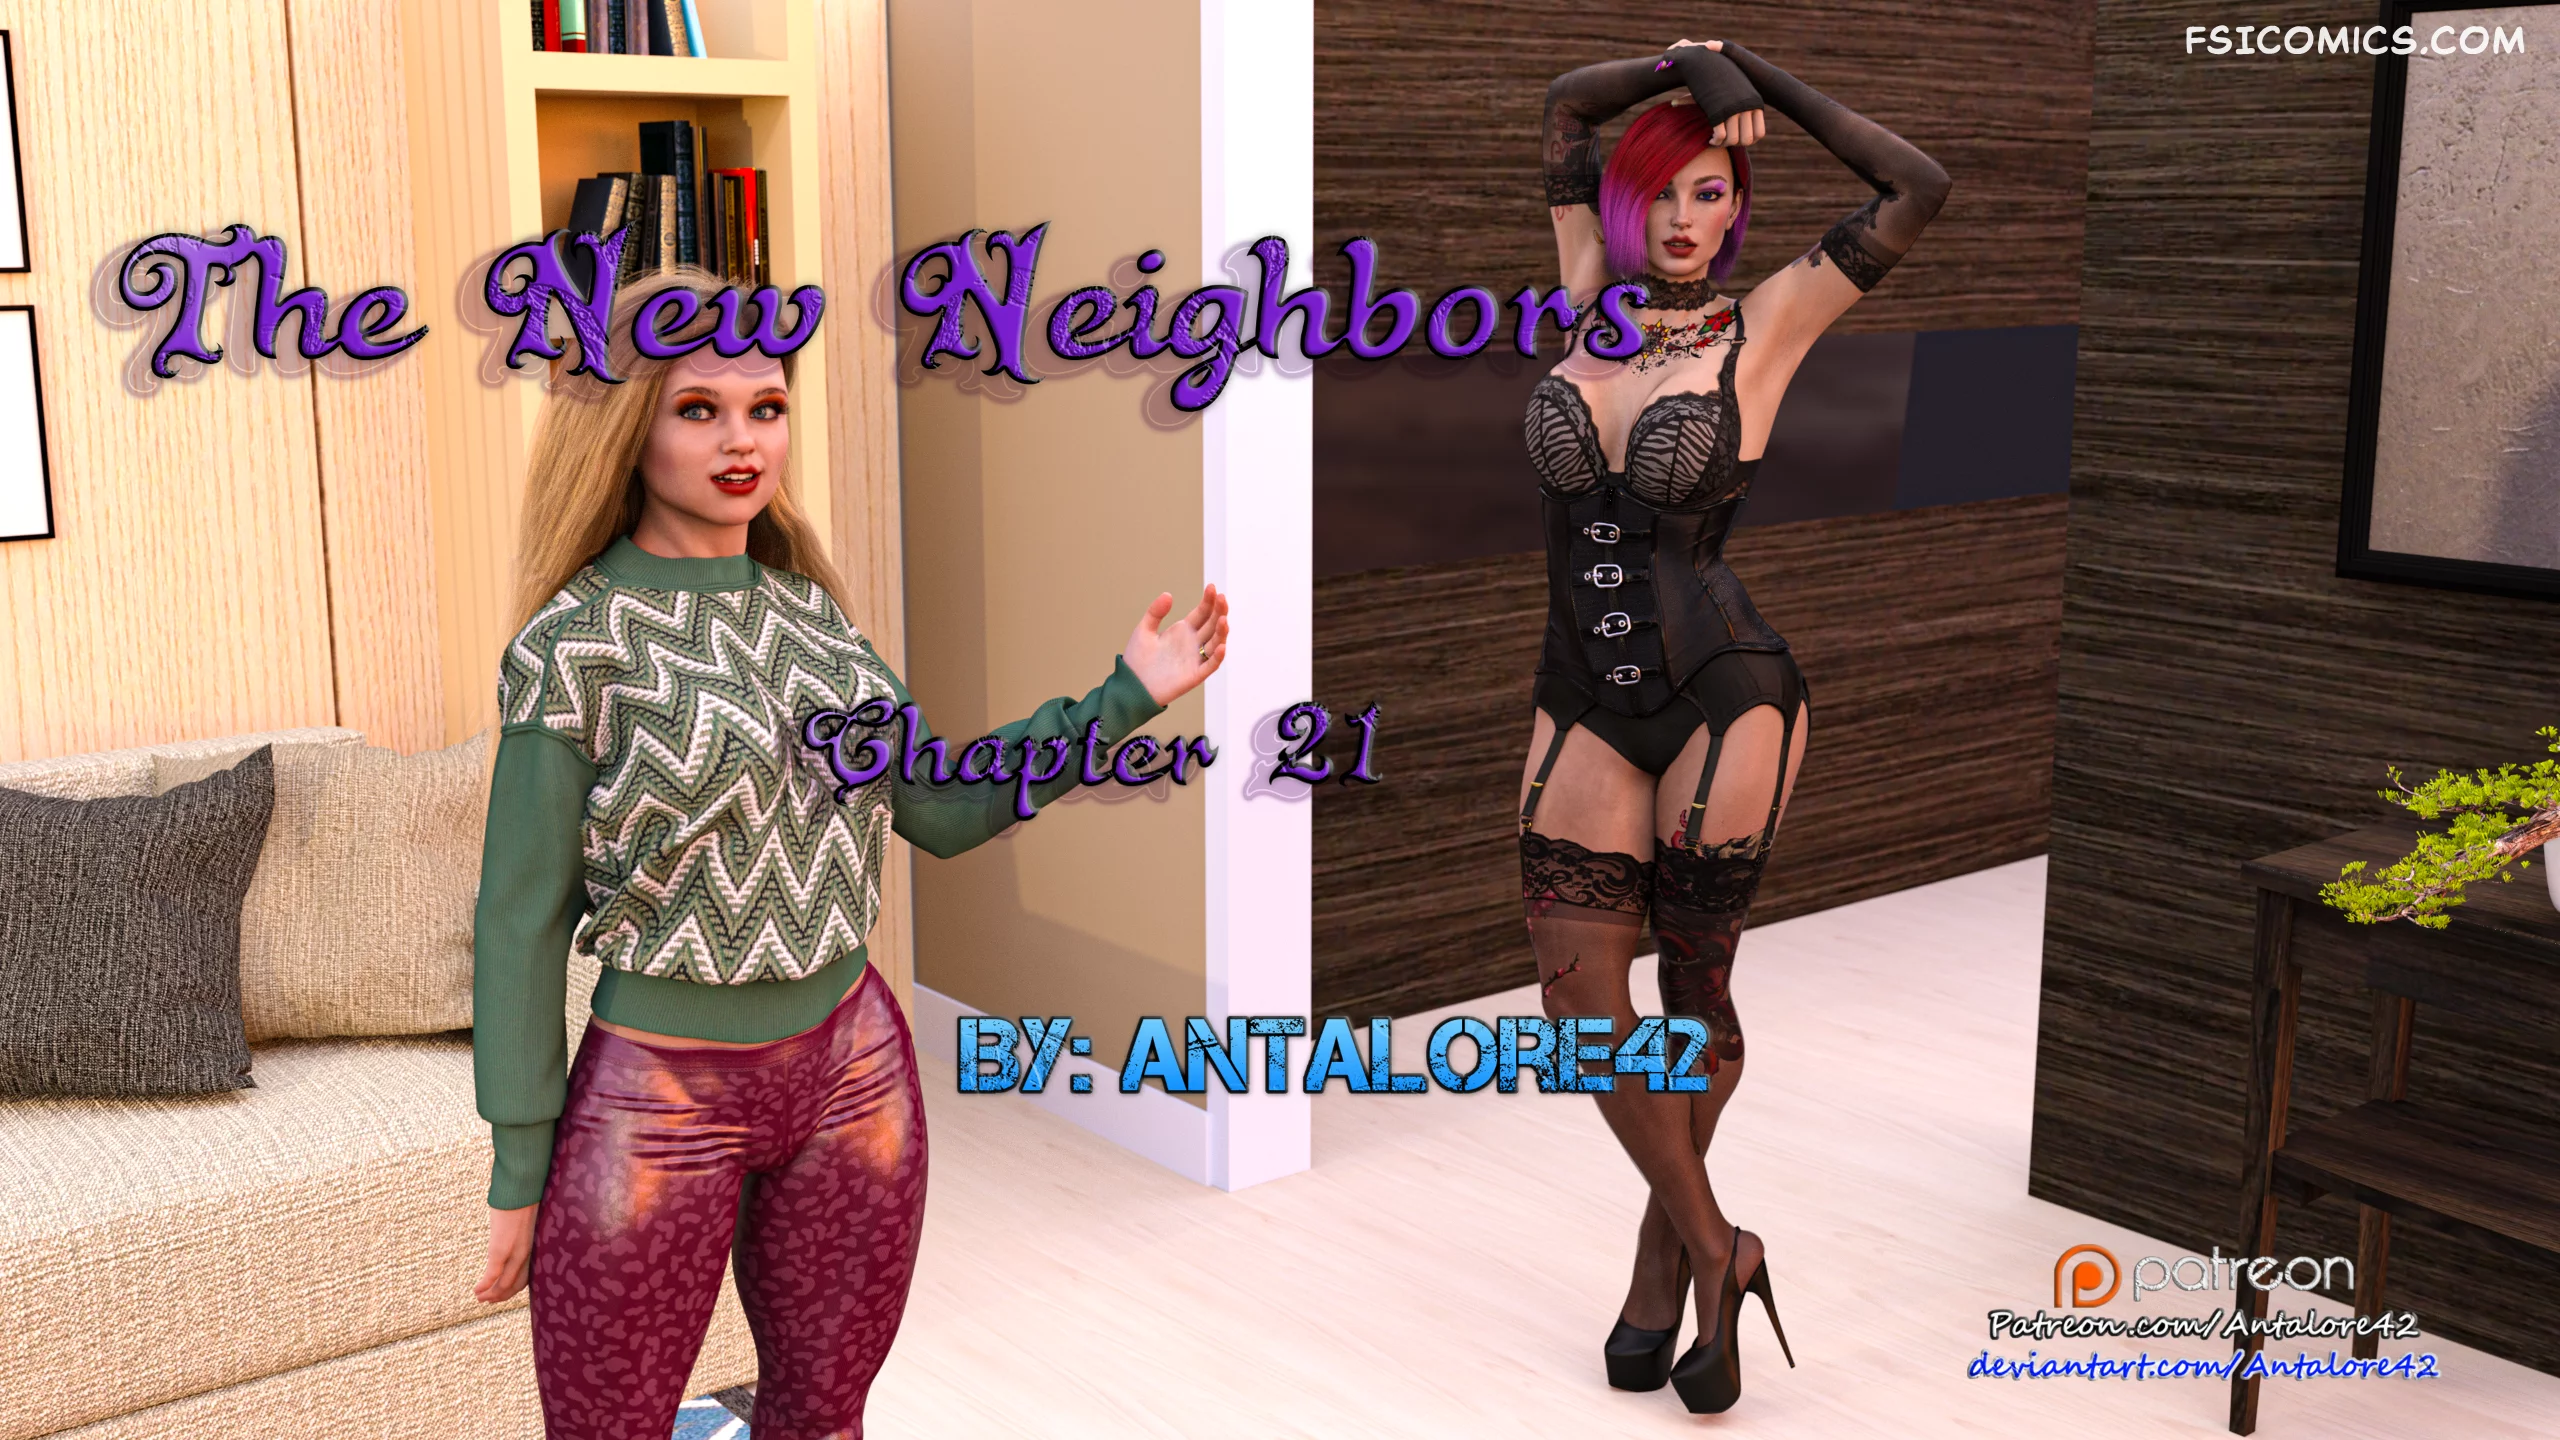 The New Neighbors Chapter 21 – Antalore42 - 23 - FSIComics